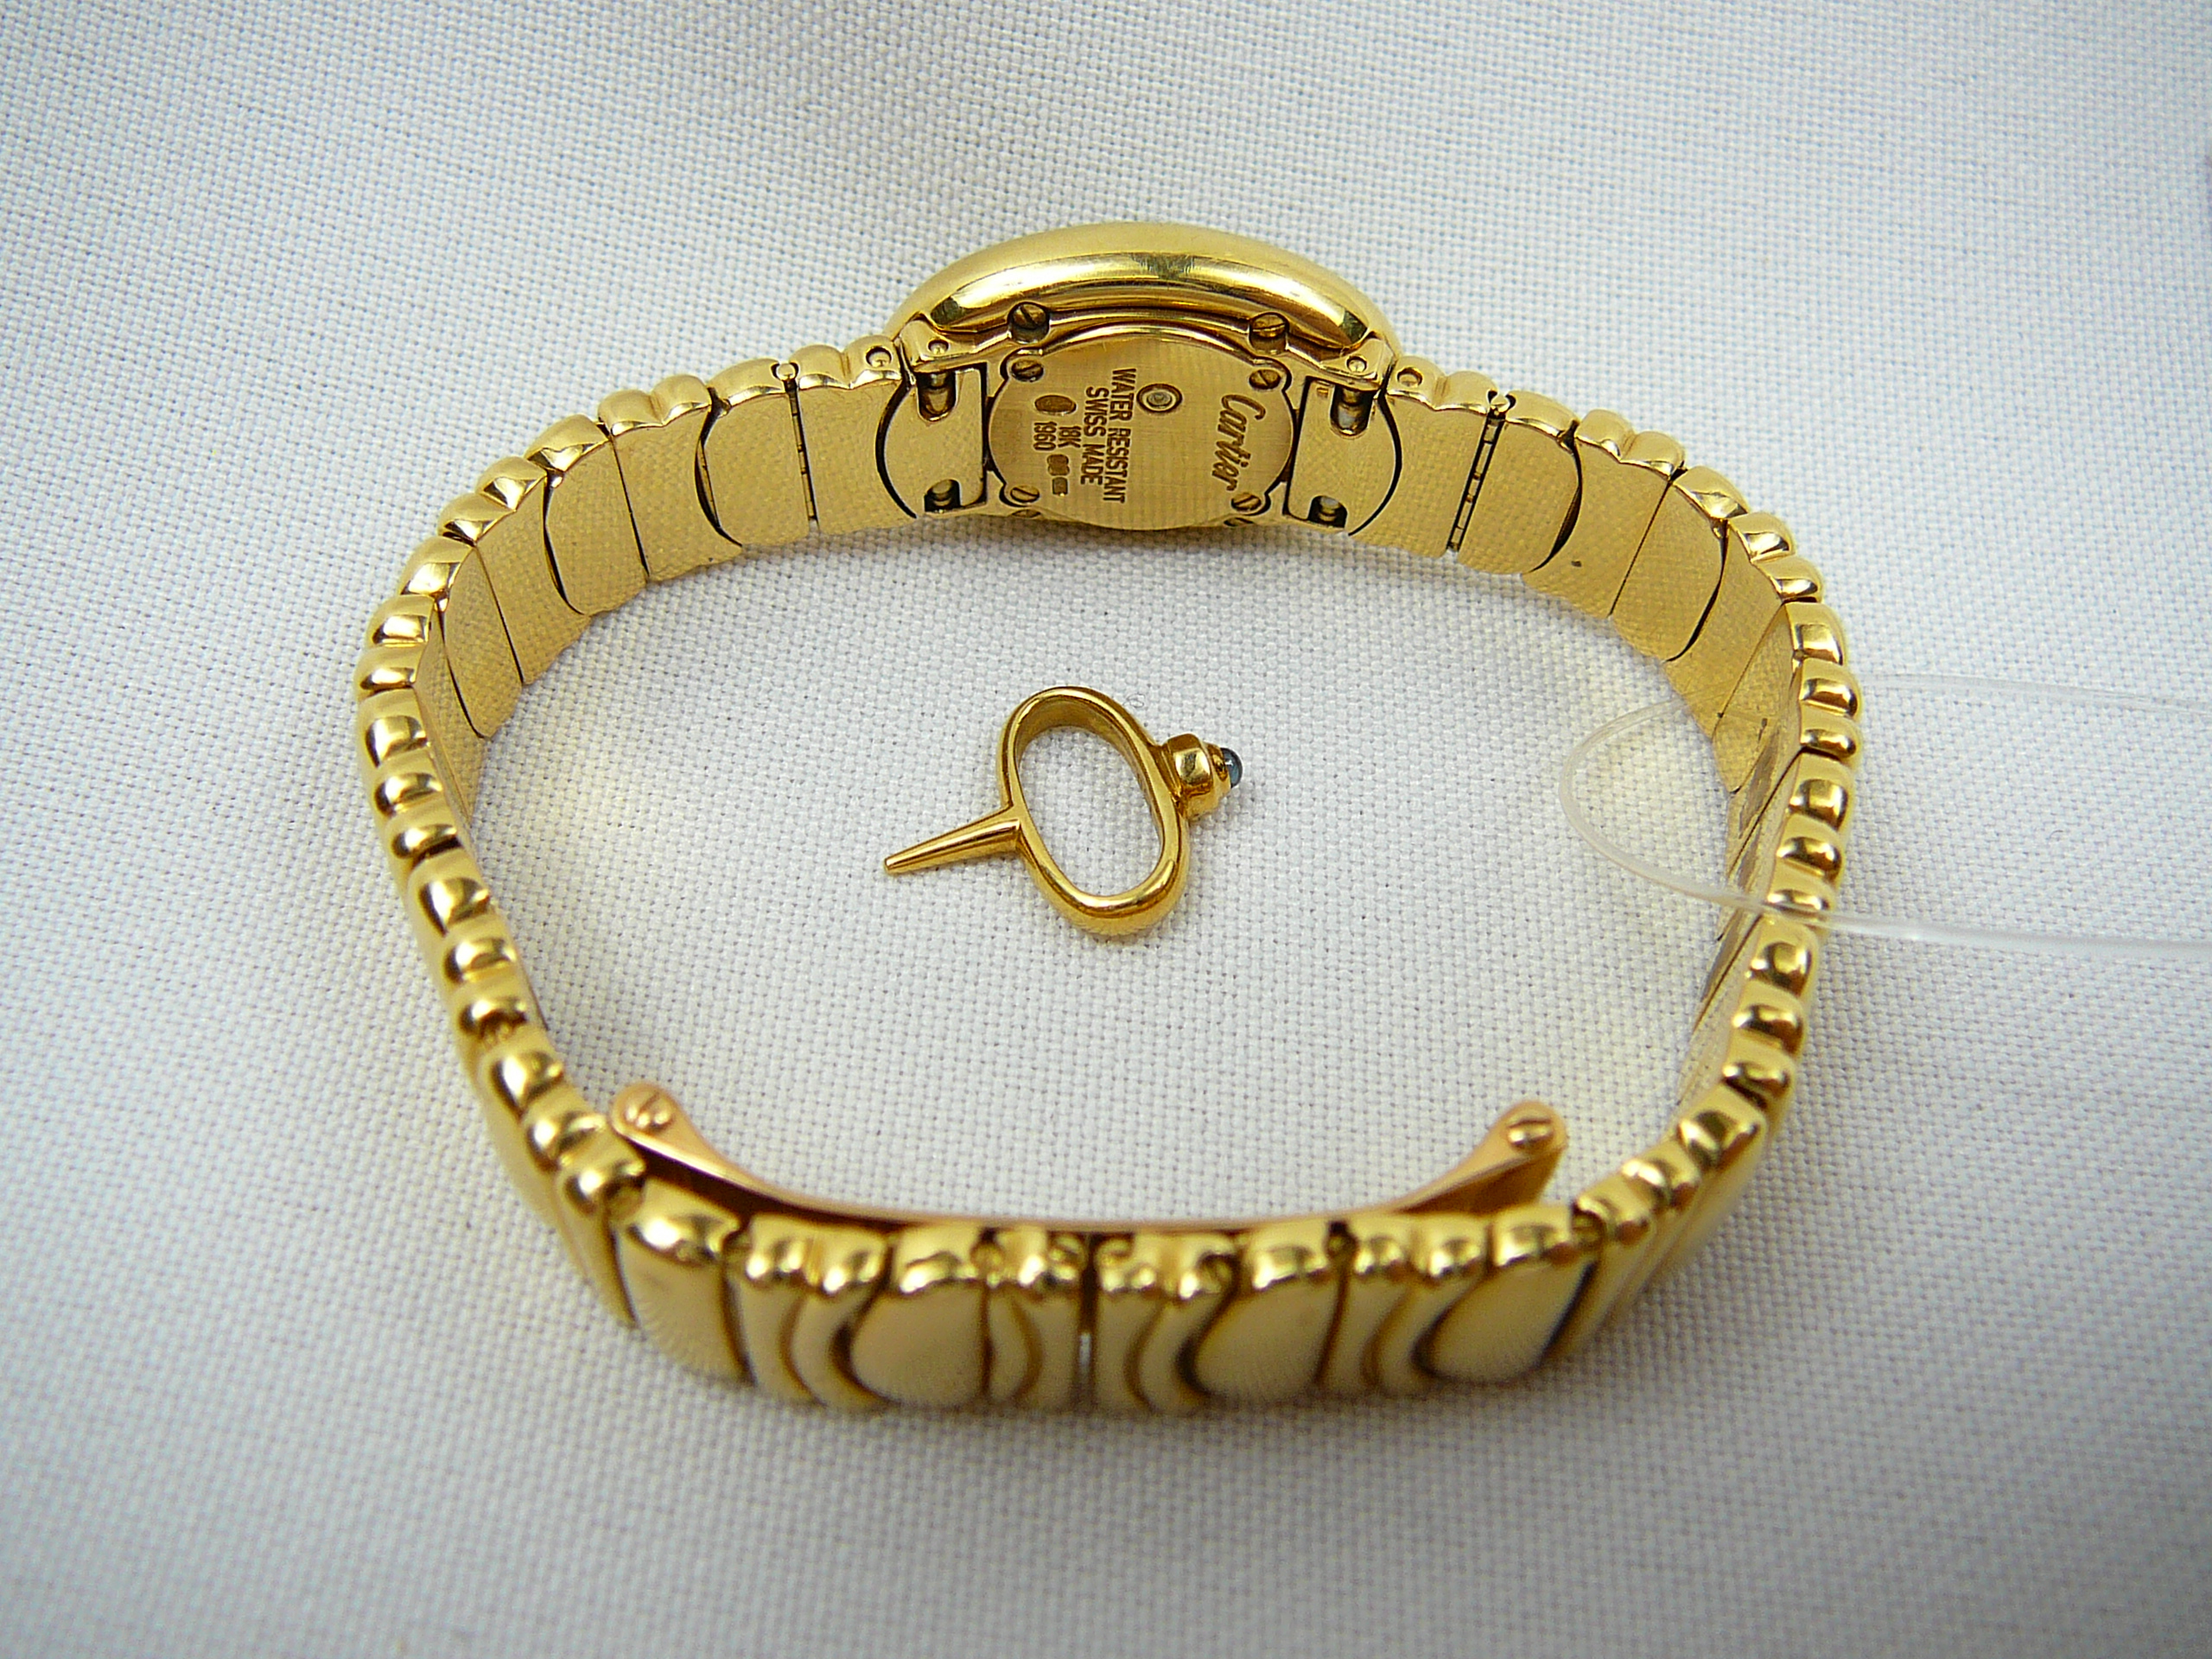 Ladies 18ct gold Cartier wrist watch - Image 5 of 5